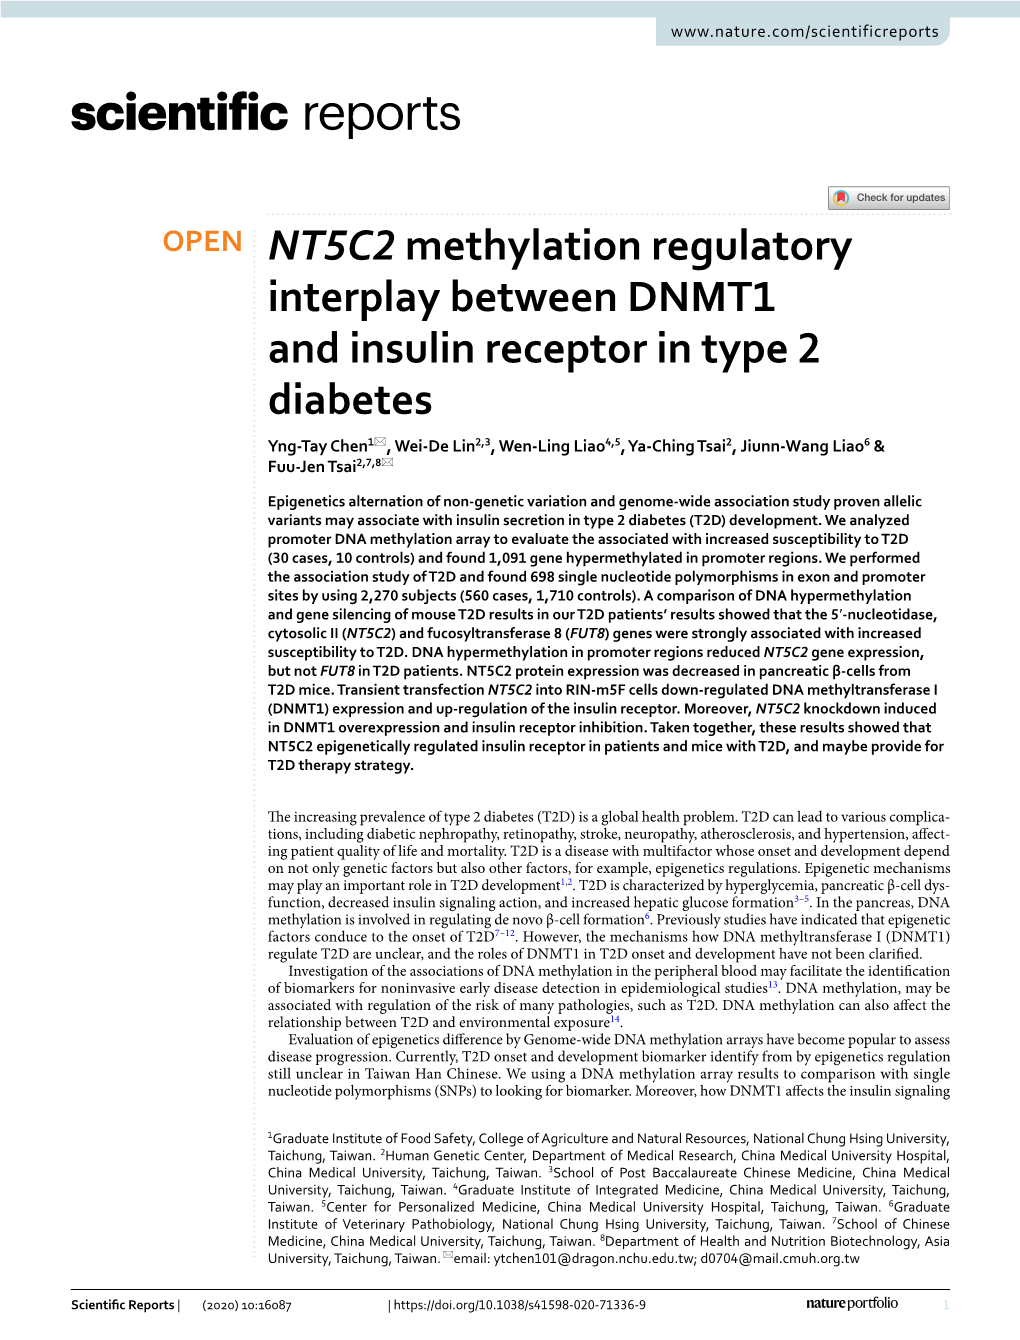 NT5C2 Methylation Regulatory Interplay Between DNMT1 And